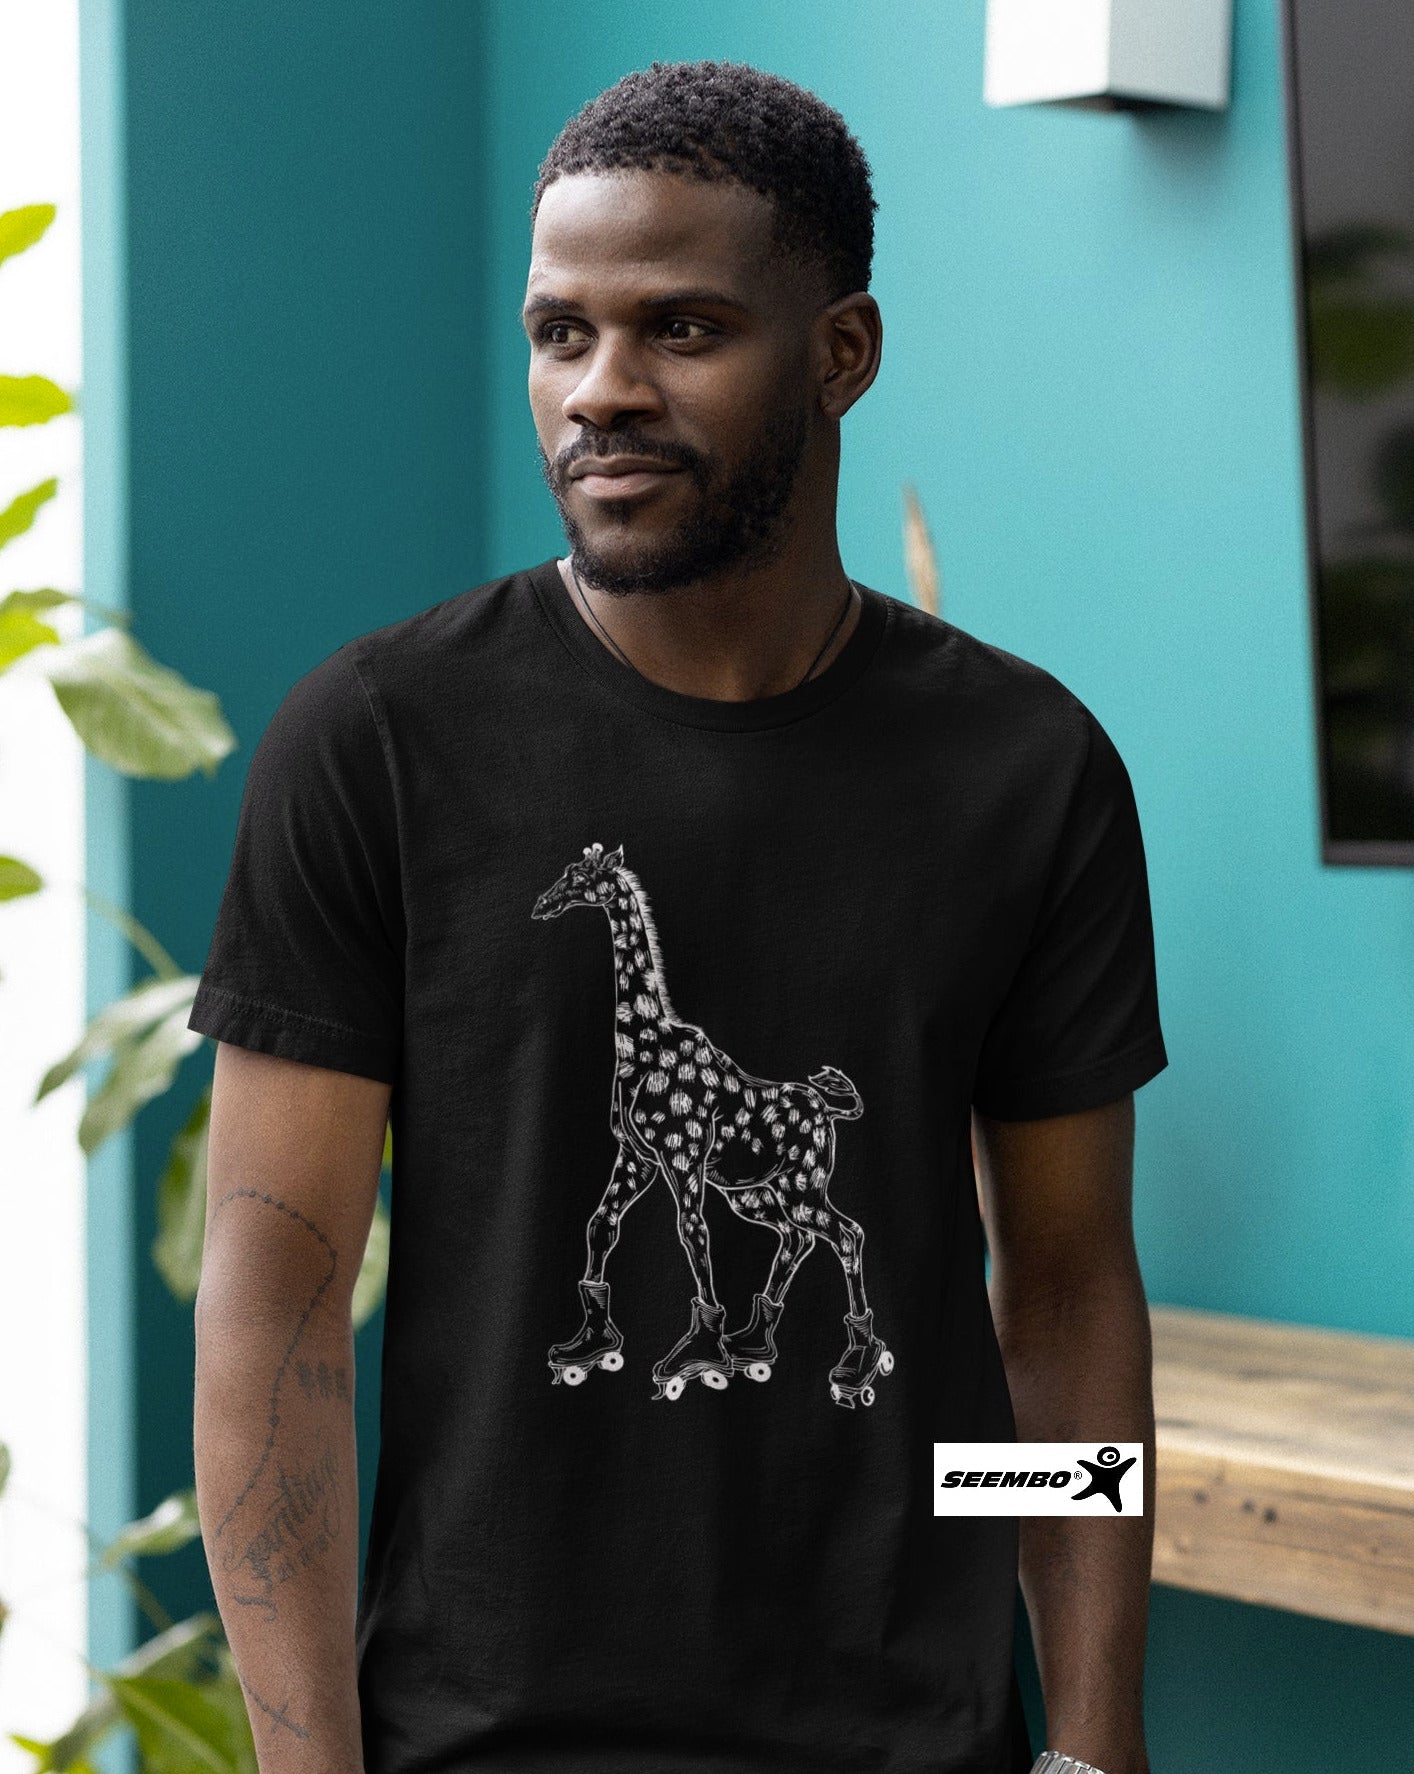 seembo-a-man-wearing-black-t-shirt-with-giraffe-skater-roller-skating-design